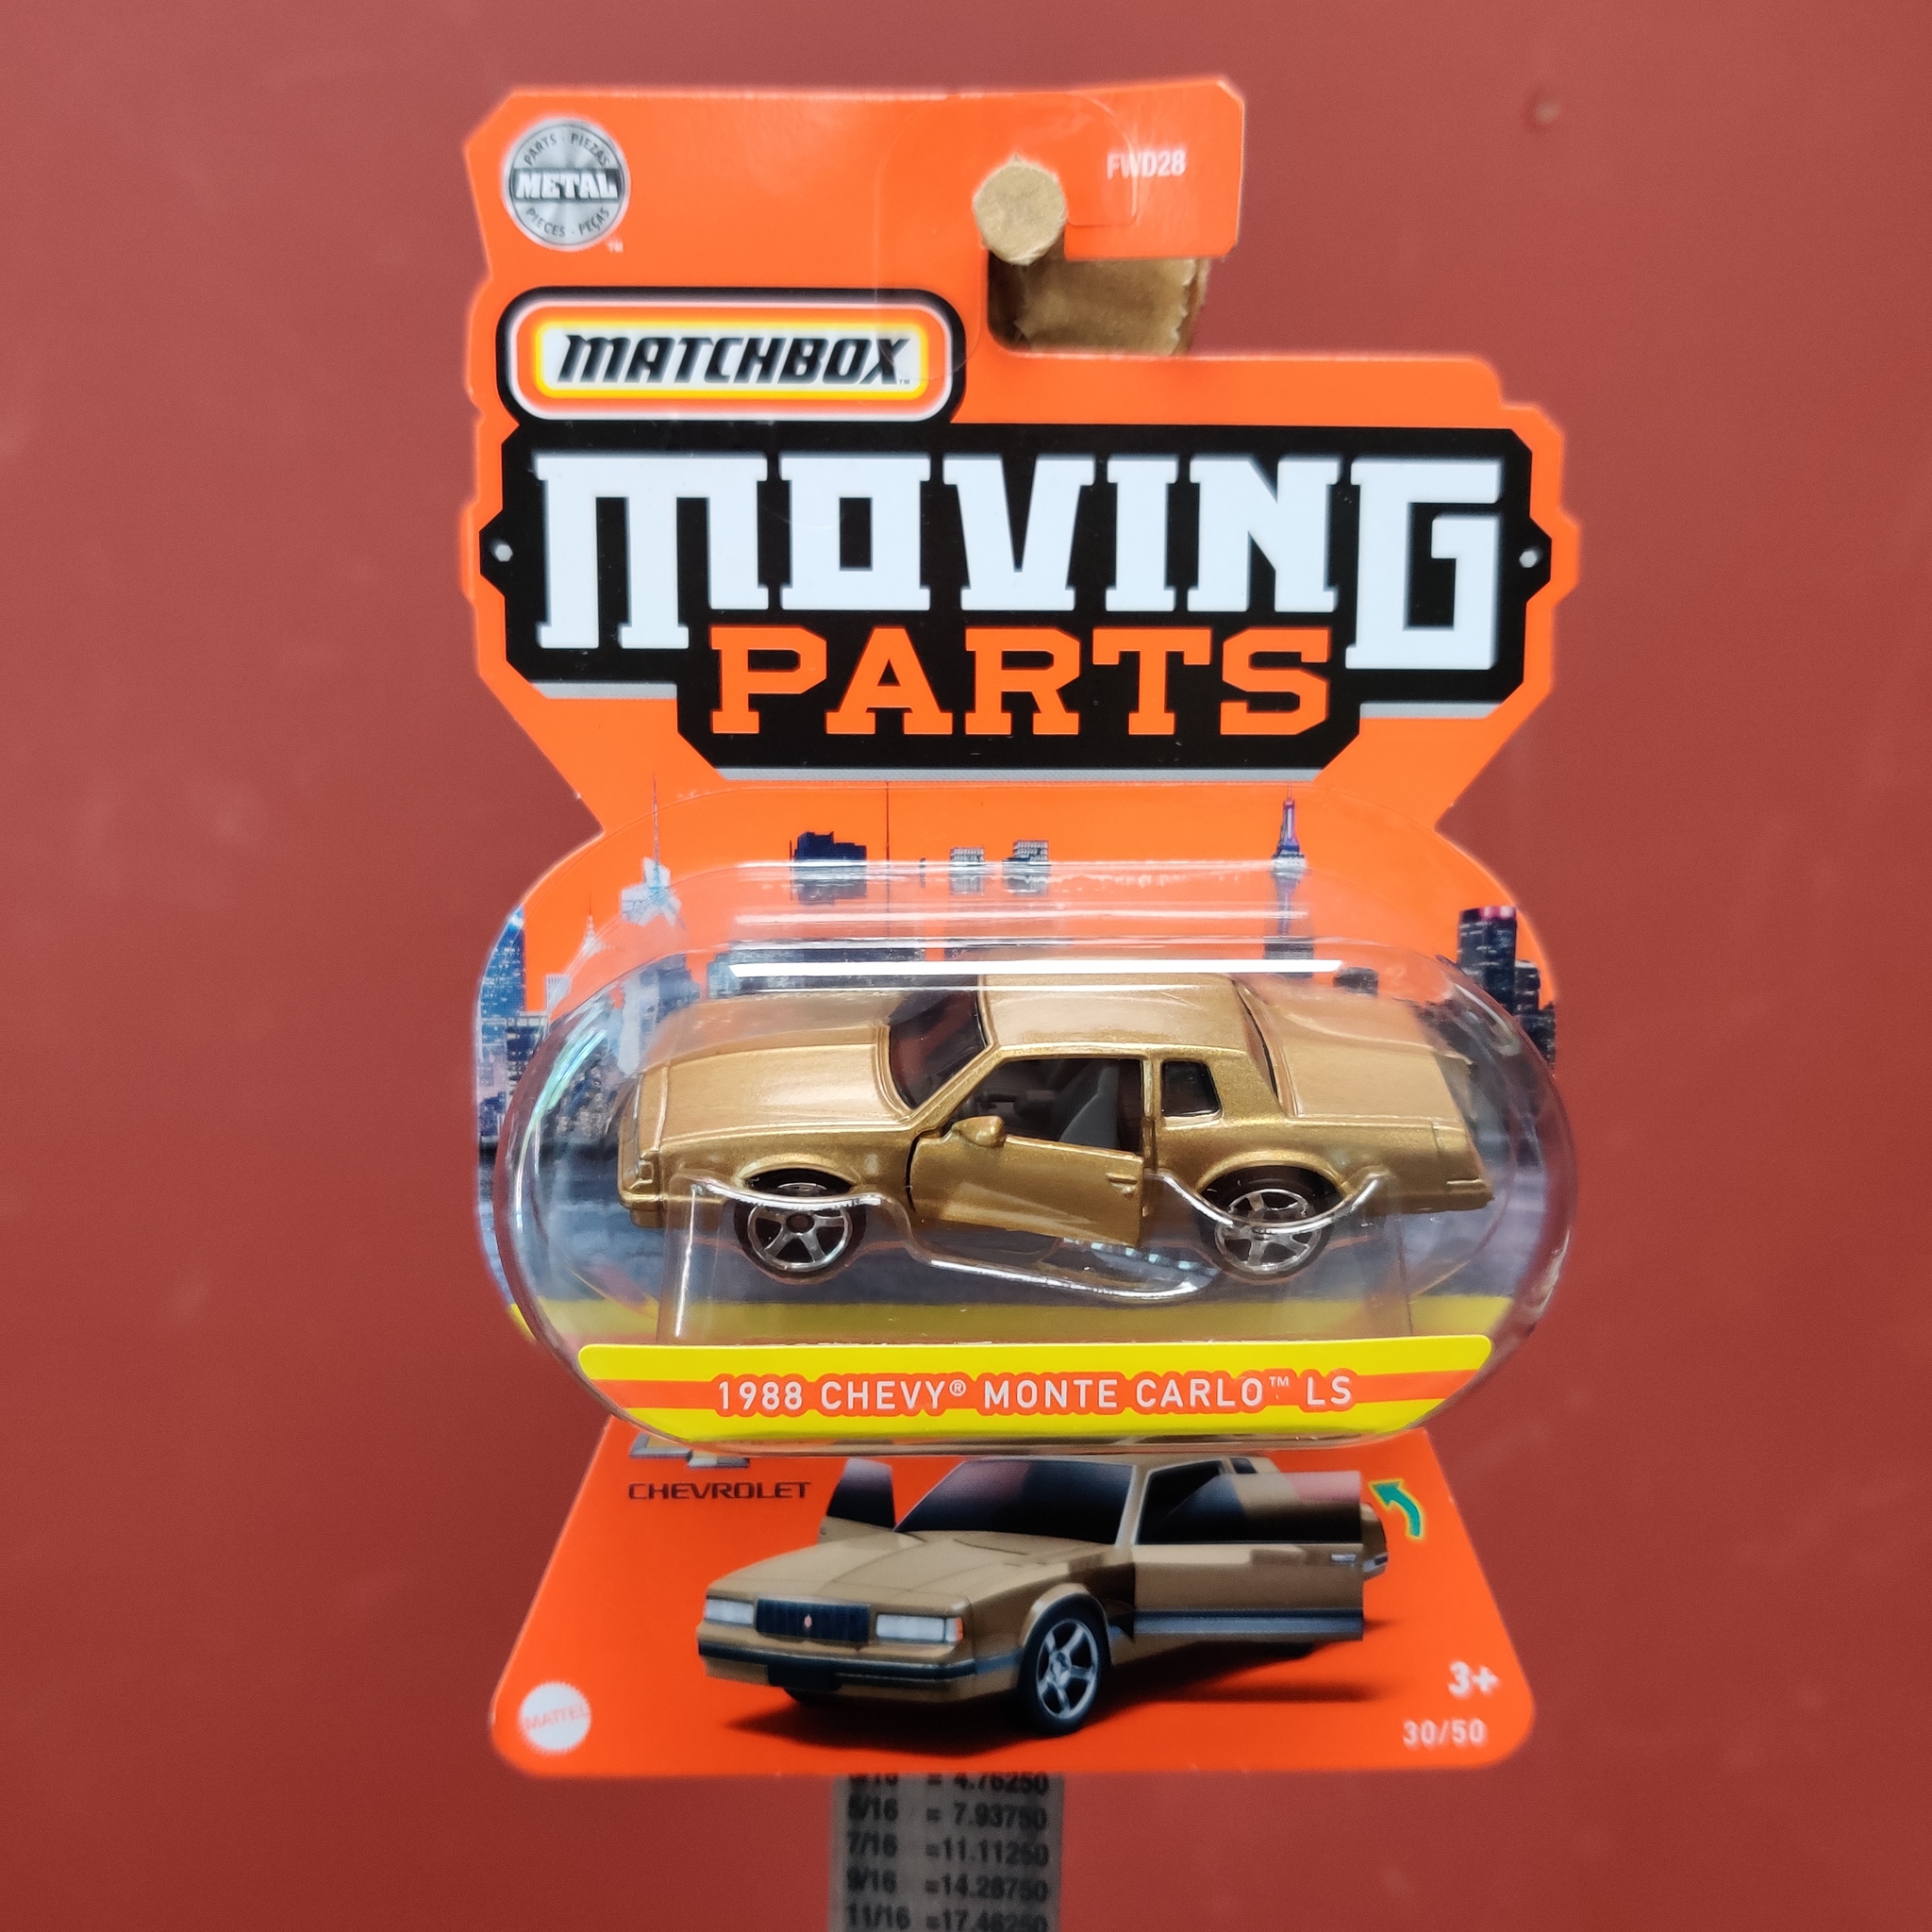 Skala 1/64 Chevy Monte Carlo LS 88' "Moving parts" från Matchbox